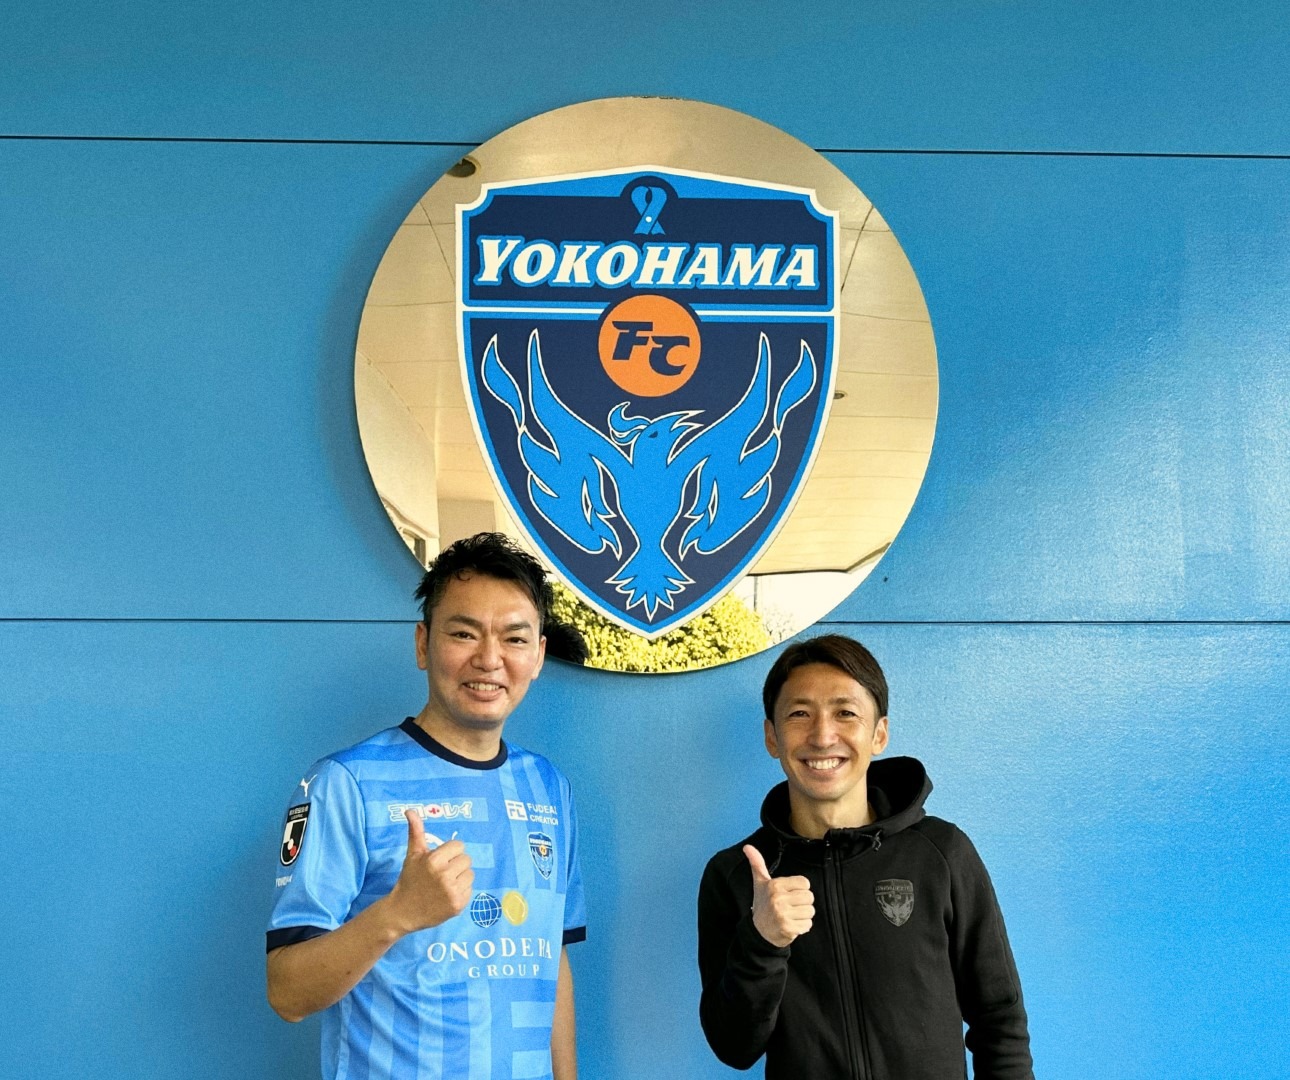 From left: Kenji Ota, Executive Director of CODE Meee, and Tomoya Uchida, C.R.O. (Club Relations Officer) of Yokohama FC